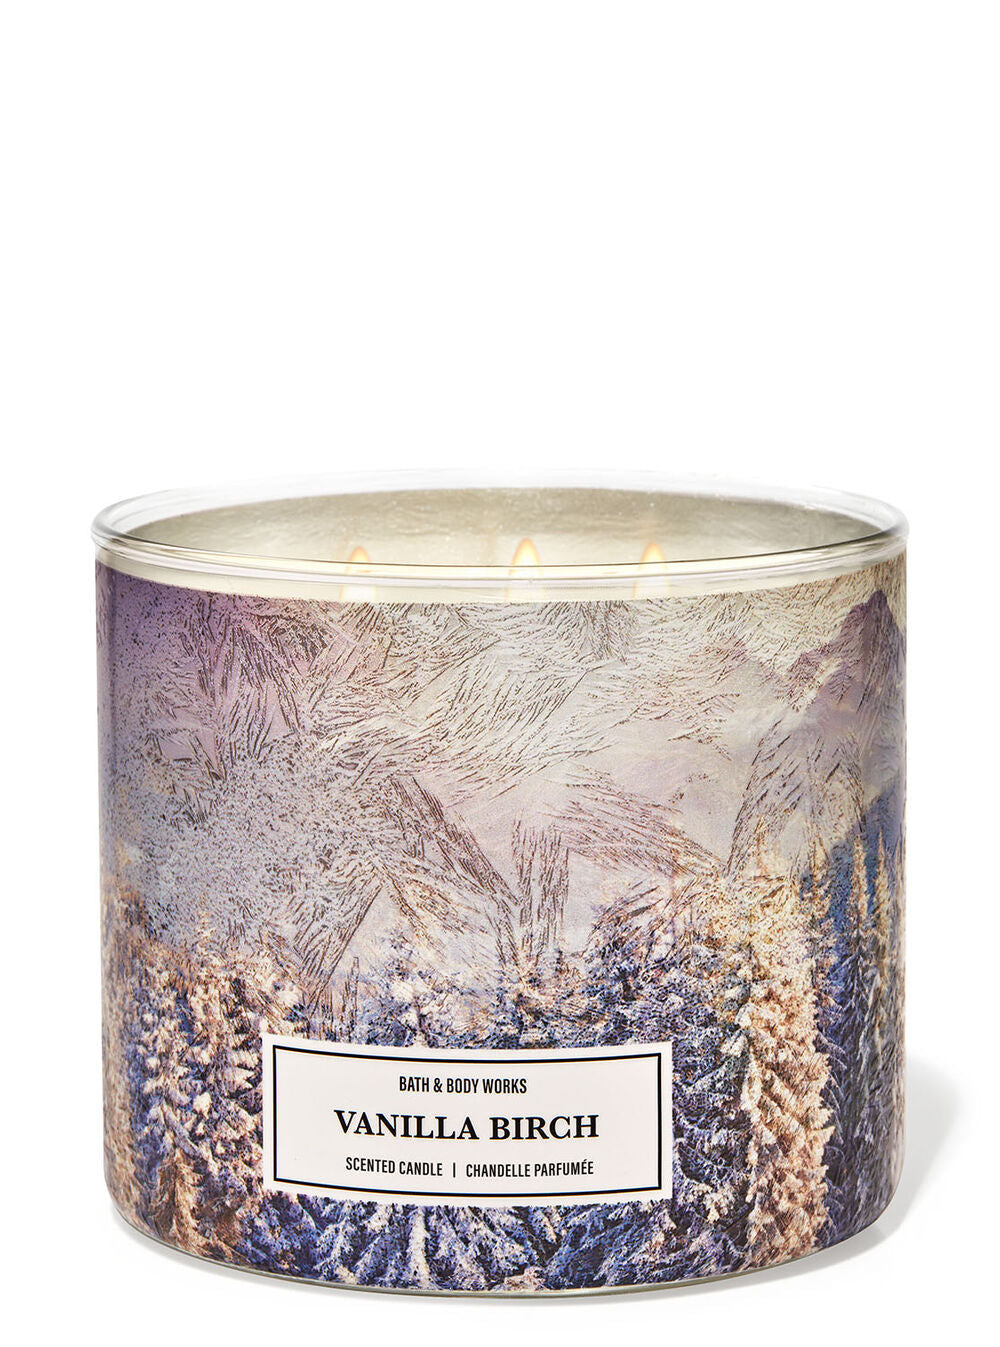 Vanilla Birch Bath & Body Works Candle Jotey